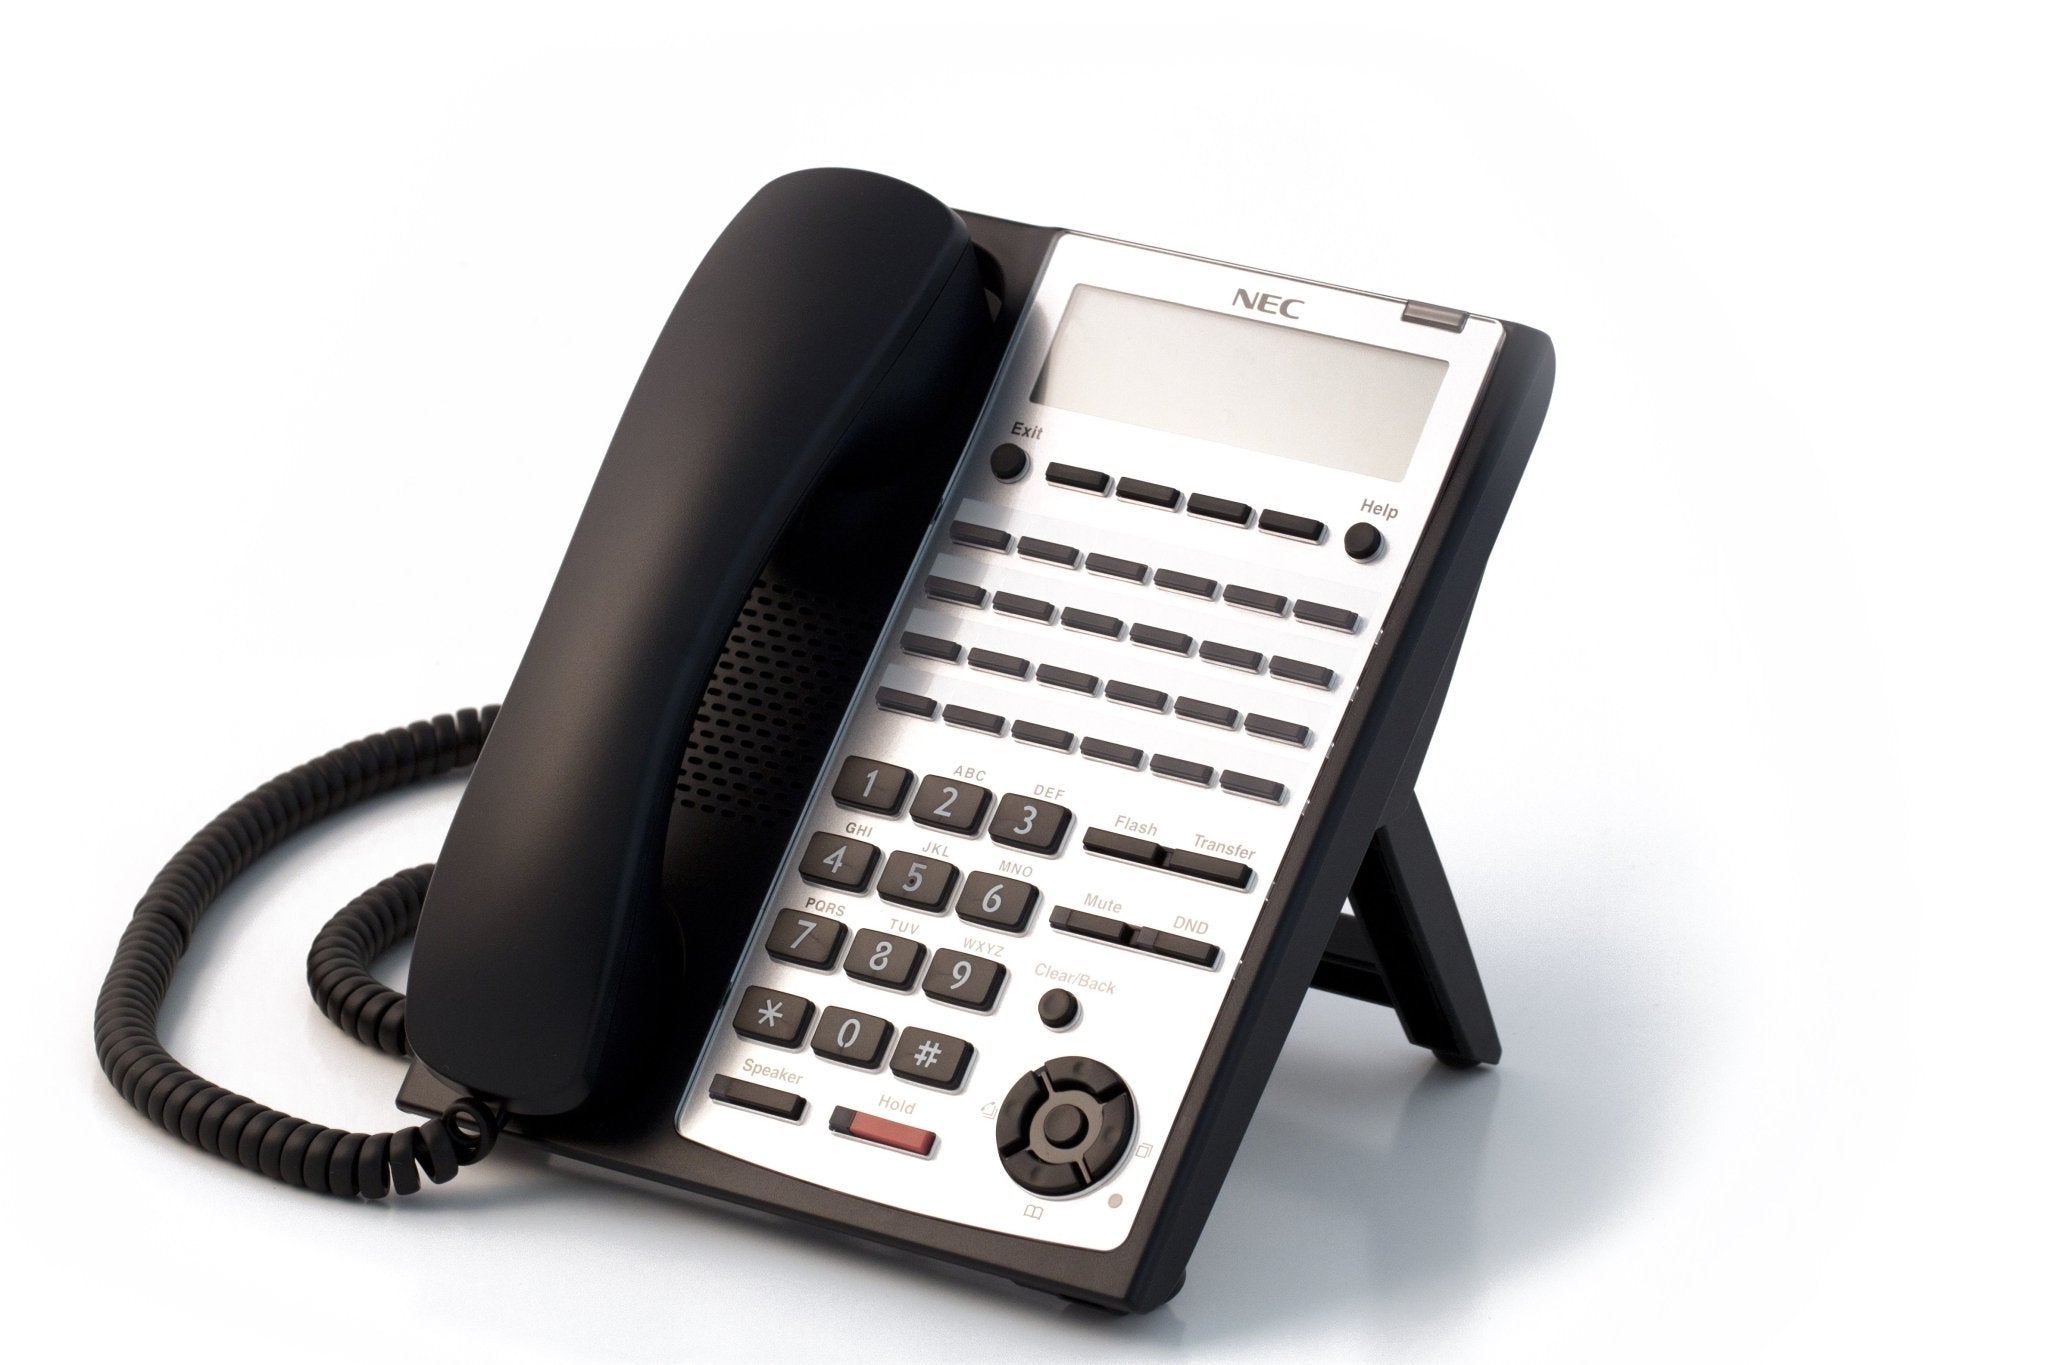 NEC SL1100 24-Button Digital Telephone (Black) NEC-1100063 - The Telecom Spot